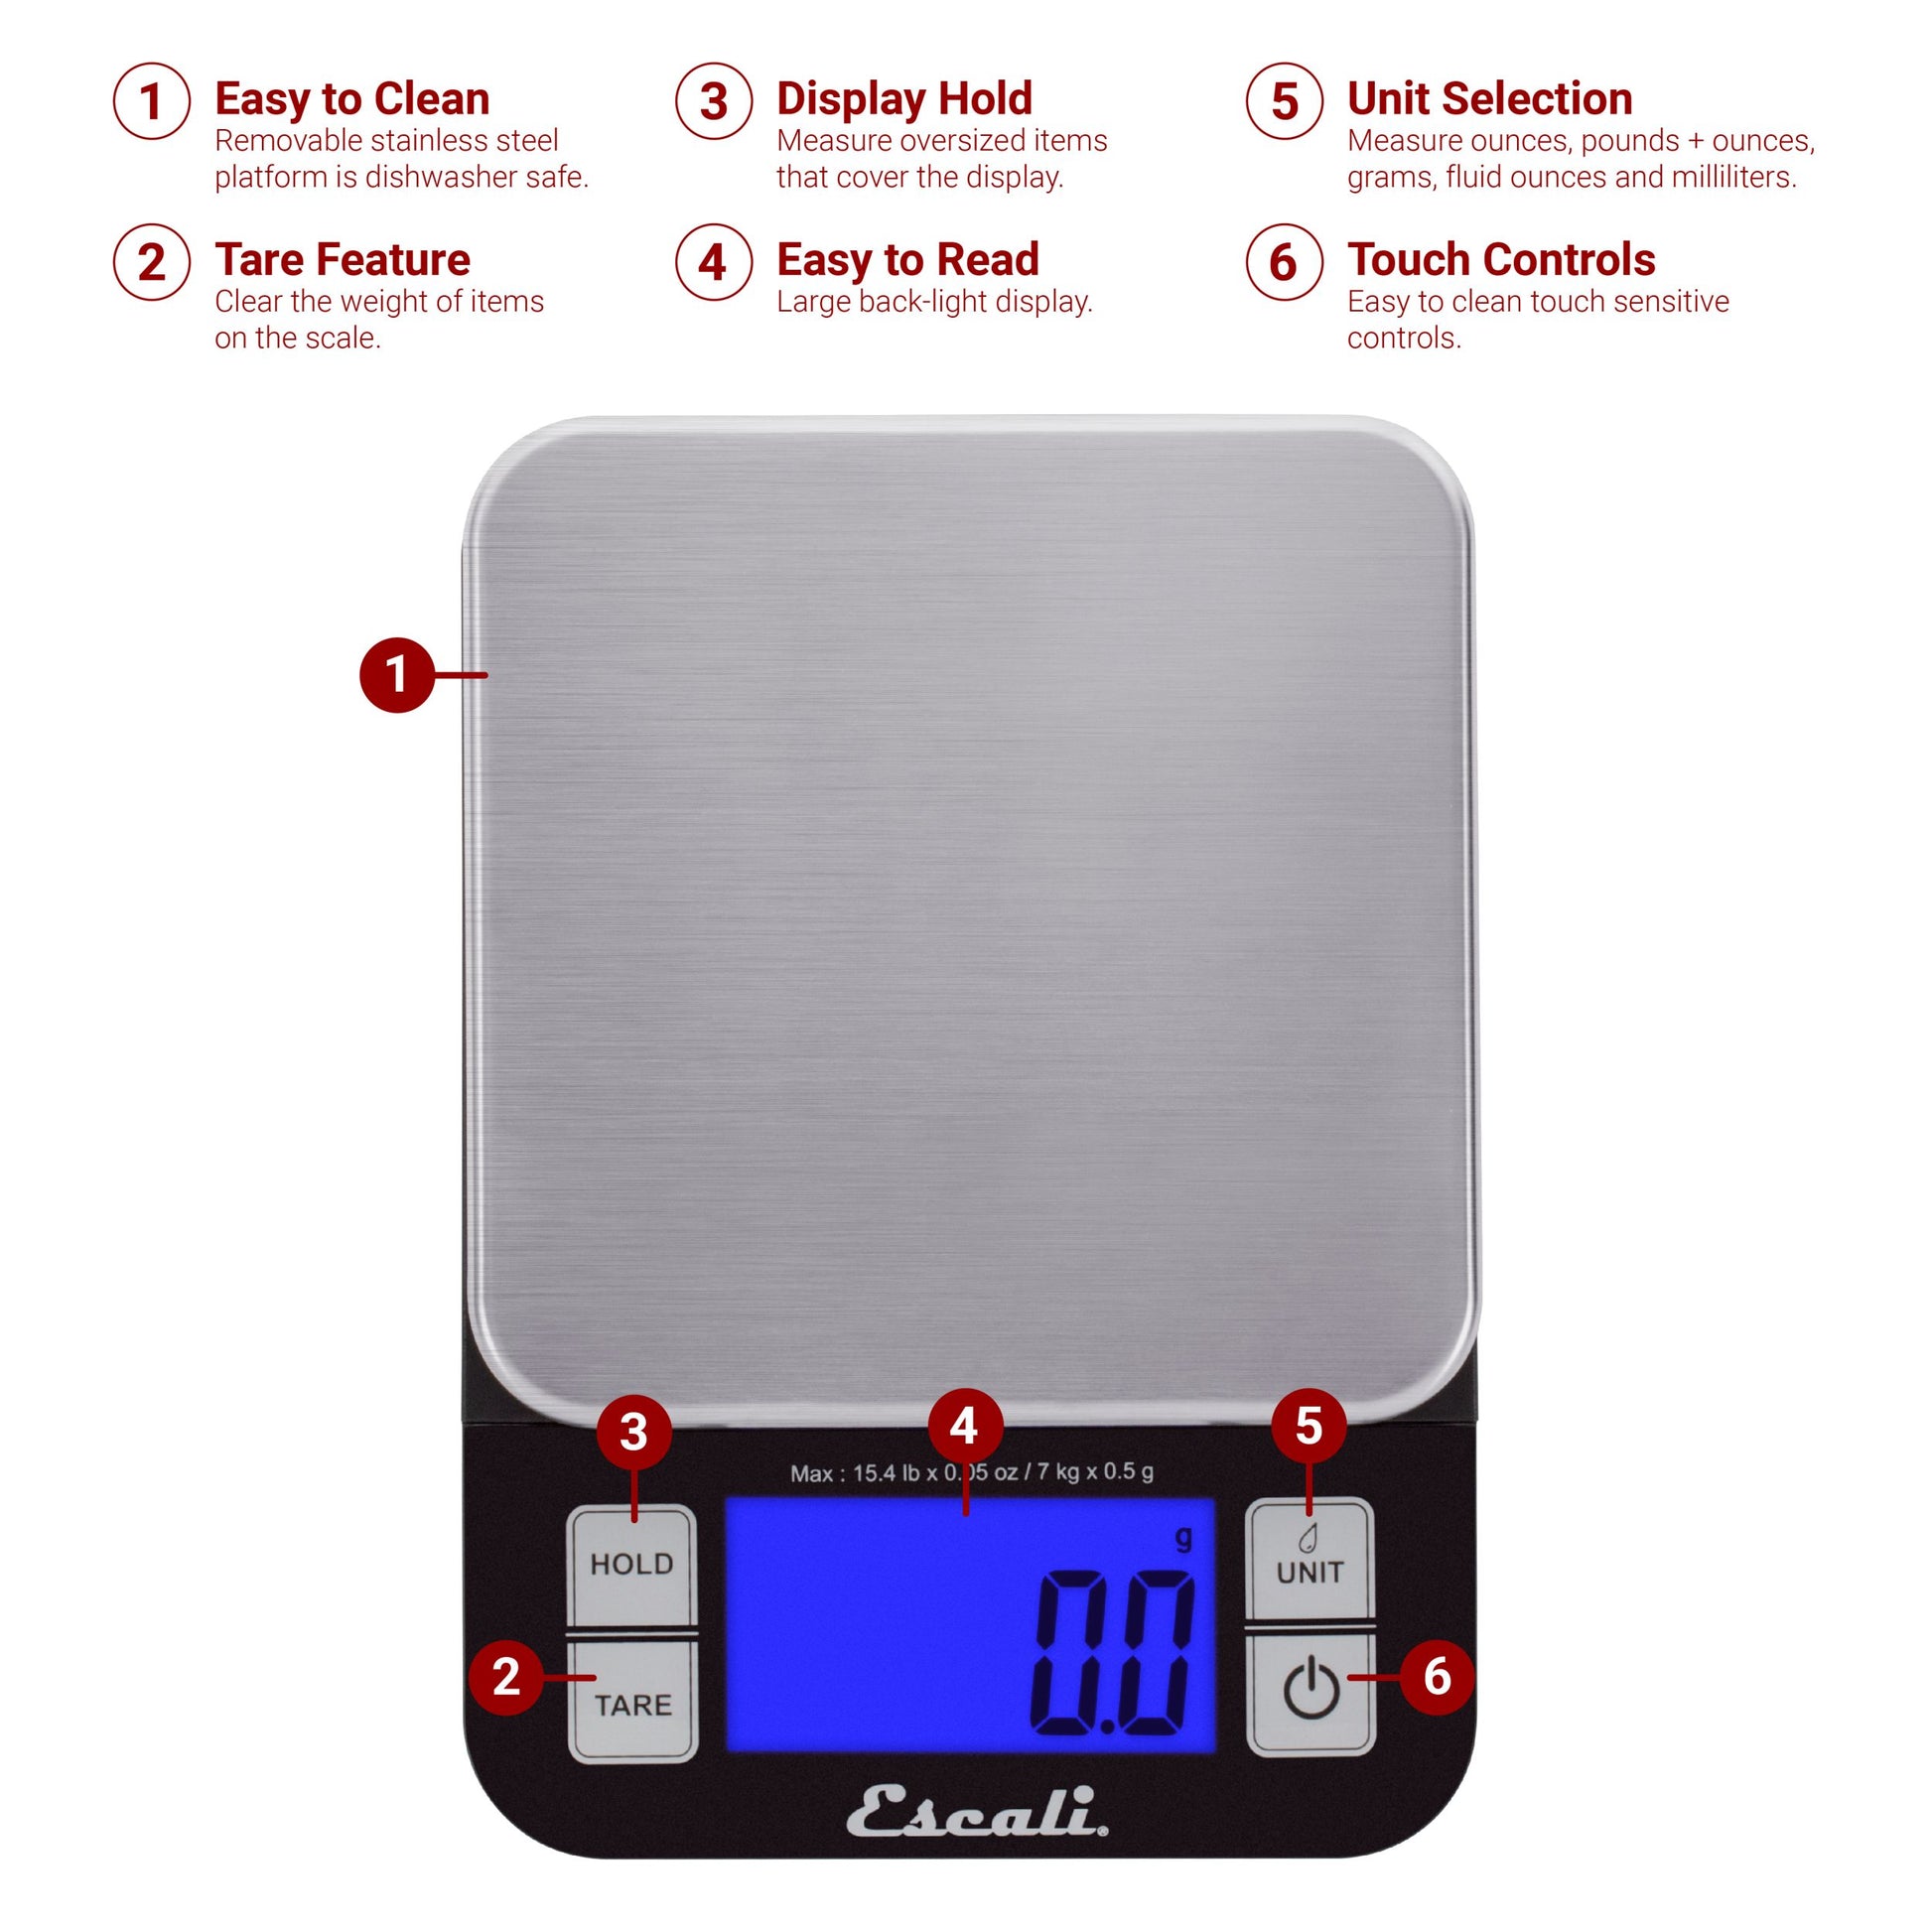 My Weigh Maestro Digital Kitchen Scale + Slide Out Precision Platform